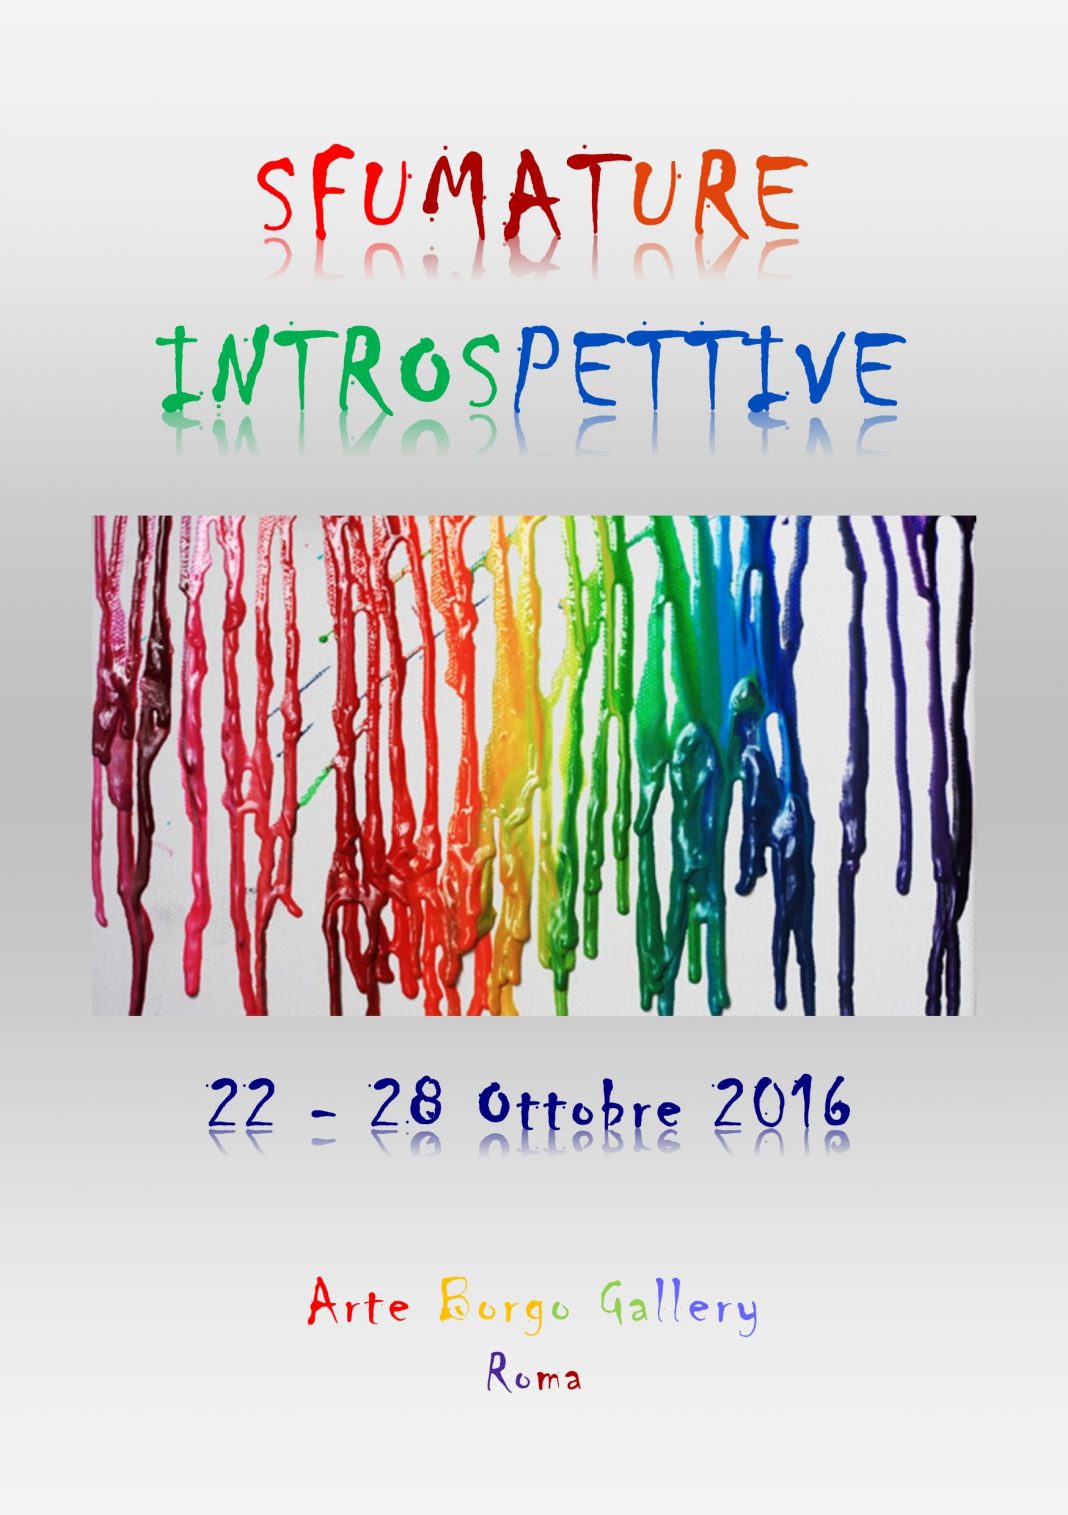 Sfumature Introspettivehttps://www.exibart.com/repository/media/eventi/2016/09/sfumature-introspettive-1068x1515.jpg